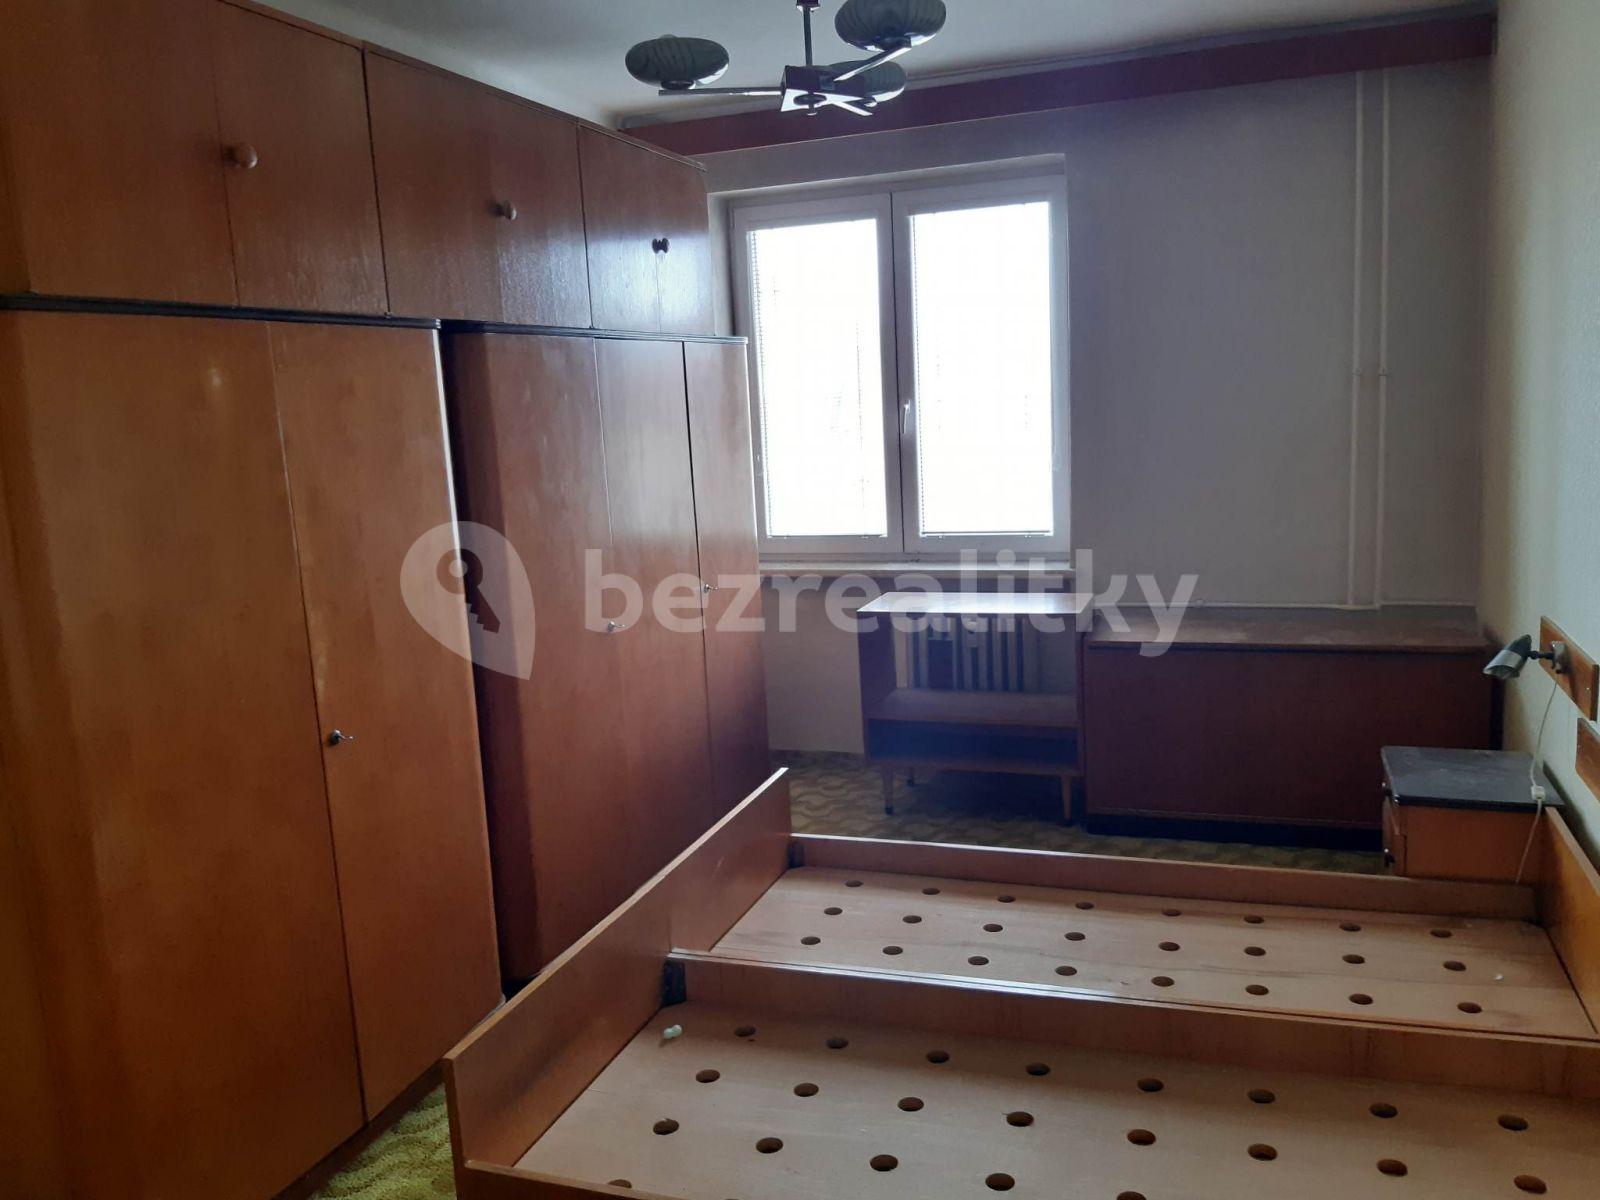 3 bedroom flat for sale, 68 m², Maxima Gorkého, Krnov, Moravskoslezský Region